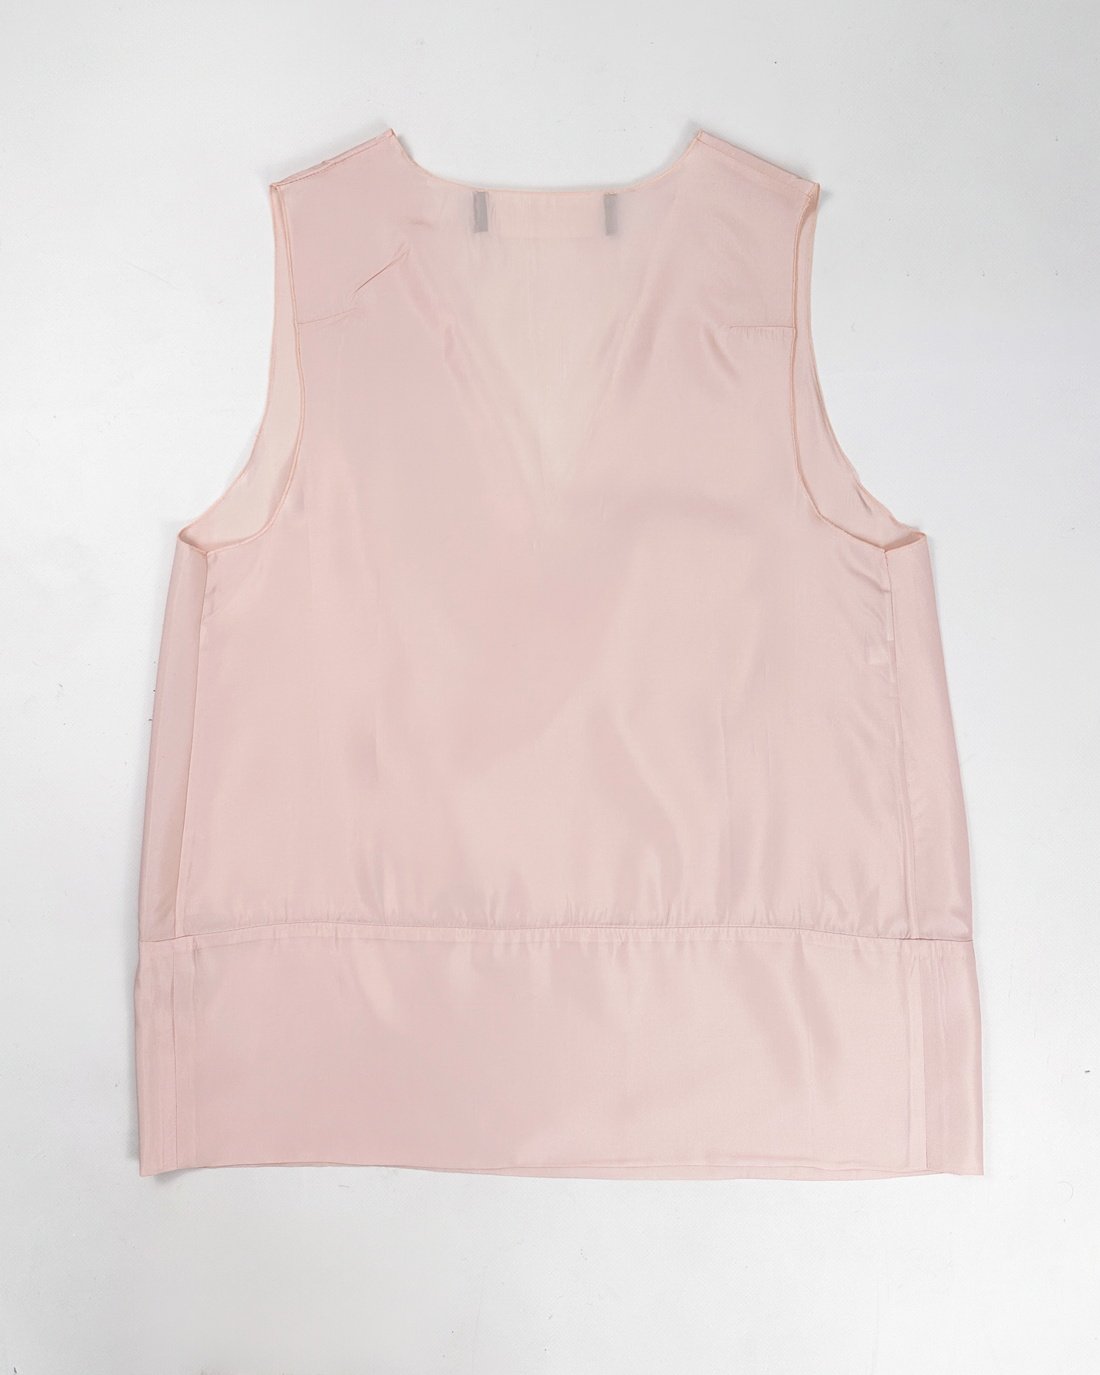 Marni Light Pink Sleeveless Silk Top 2000's